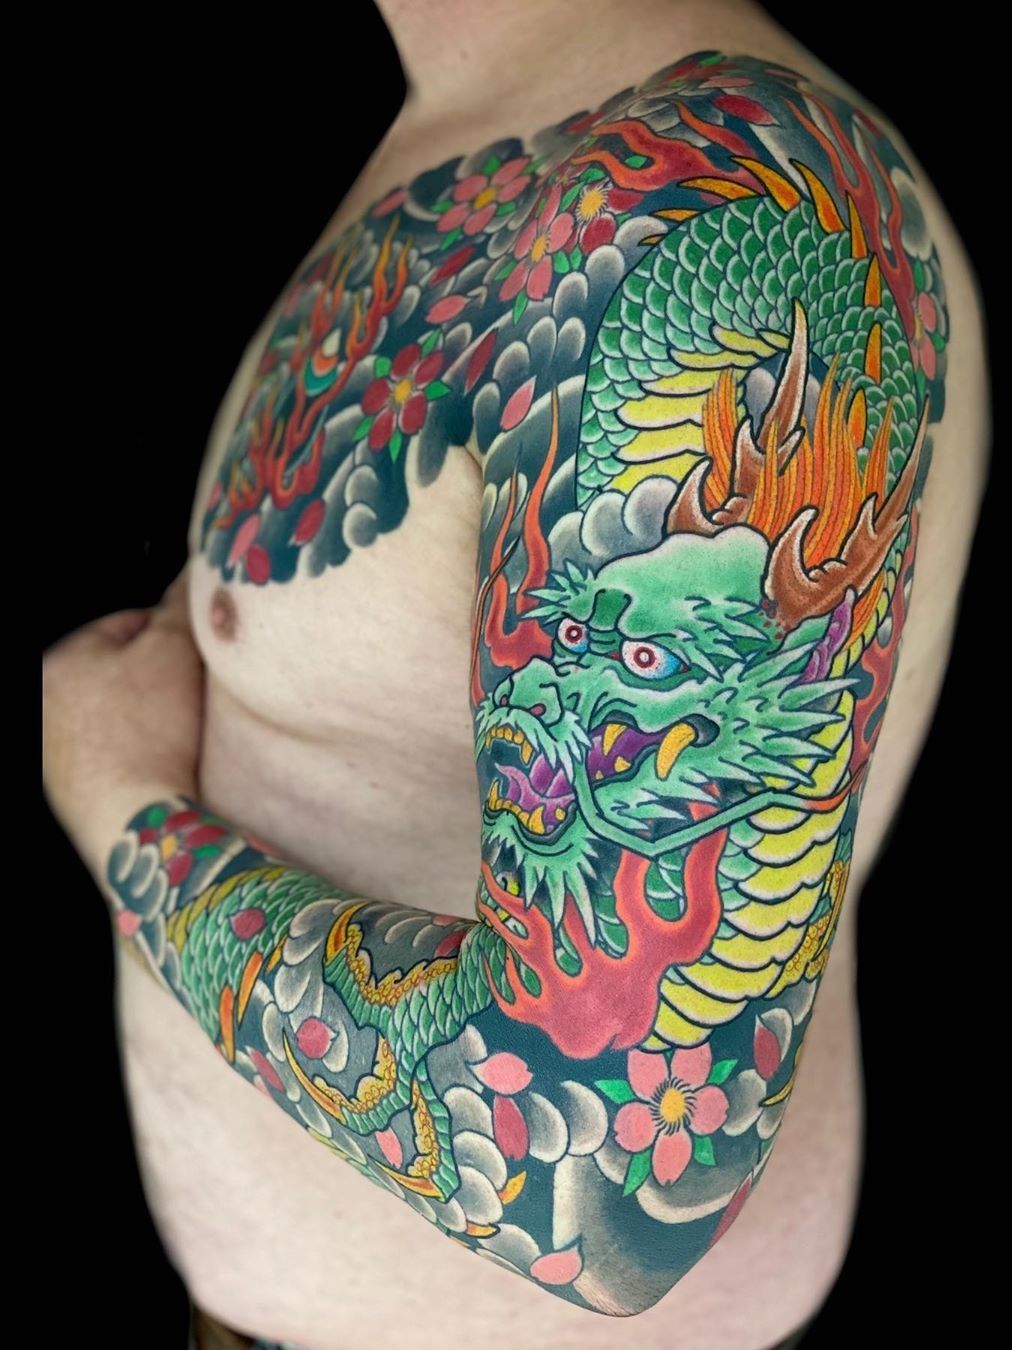 Double dragon full arm sleeve tattoo | Tattoo contest | 99designs